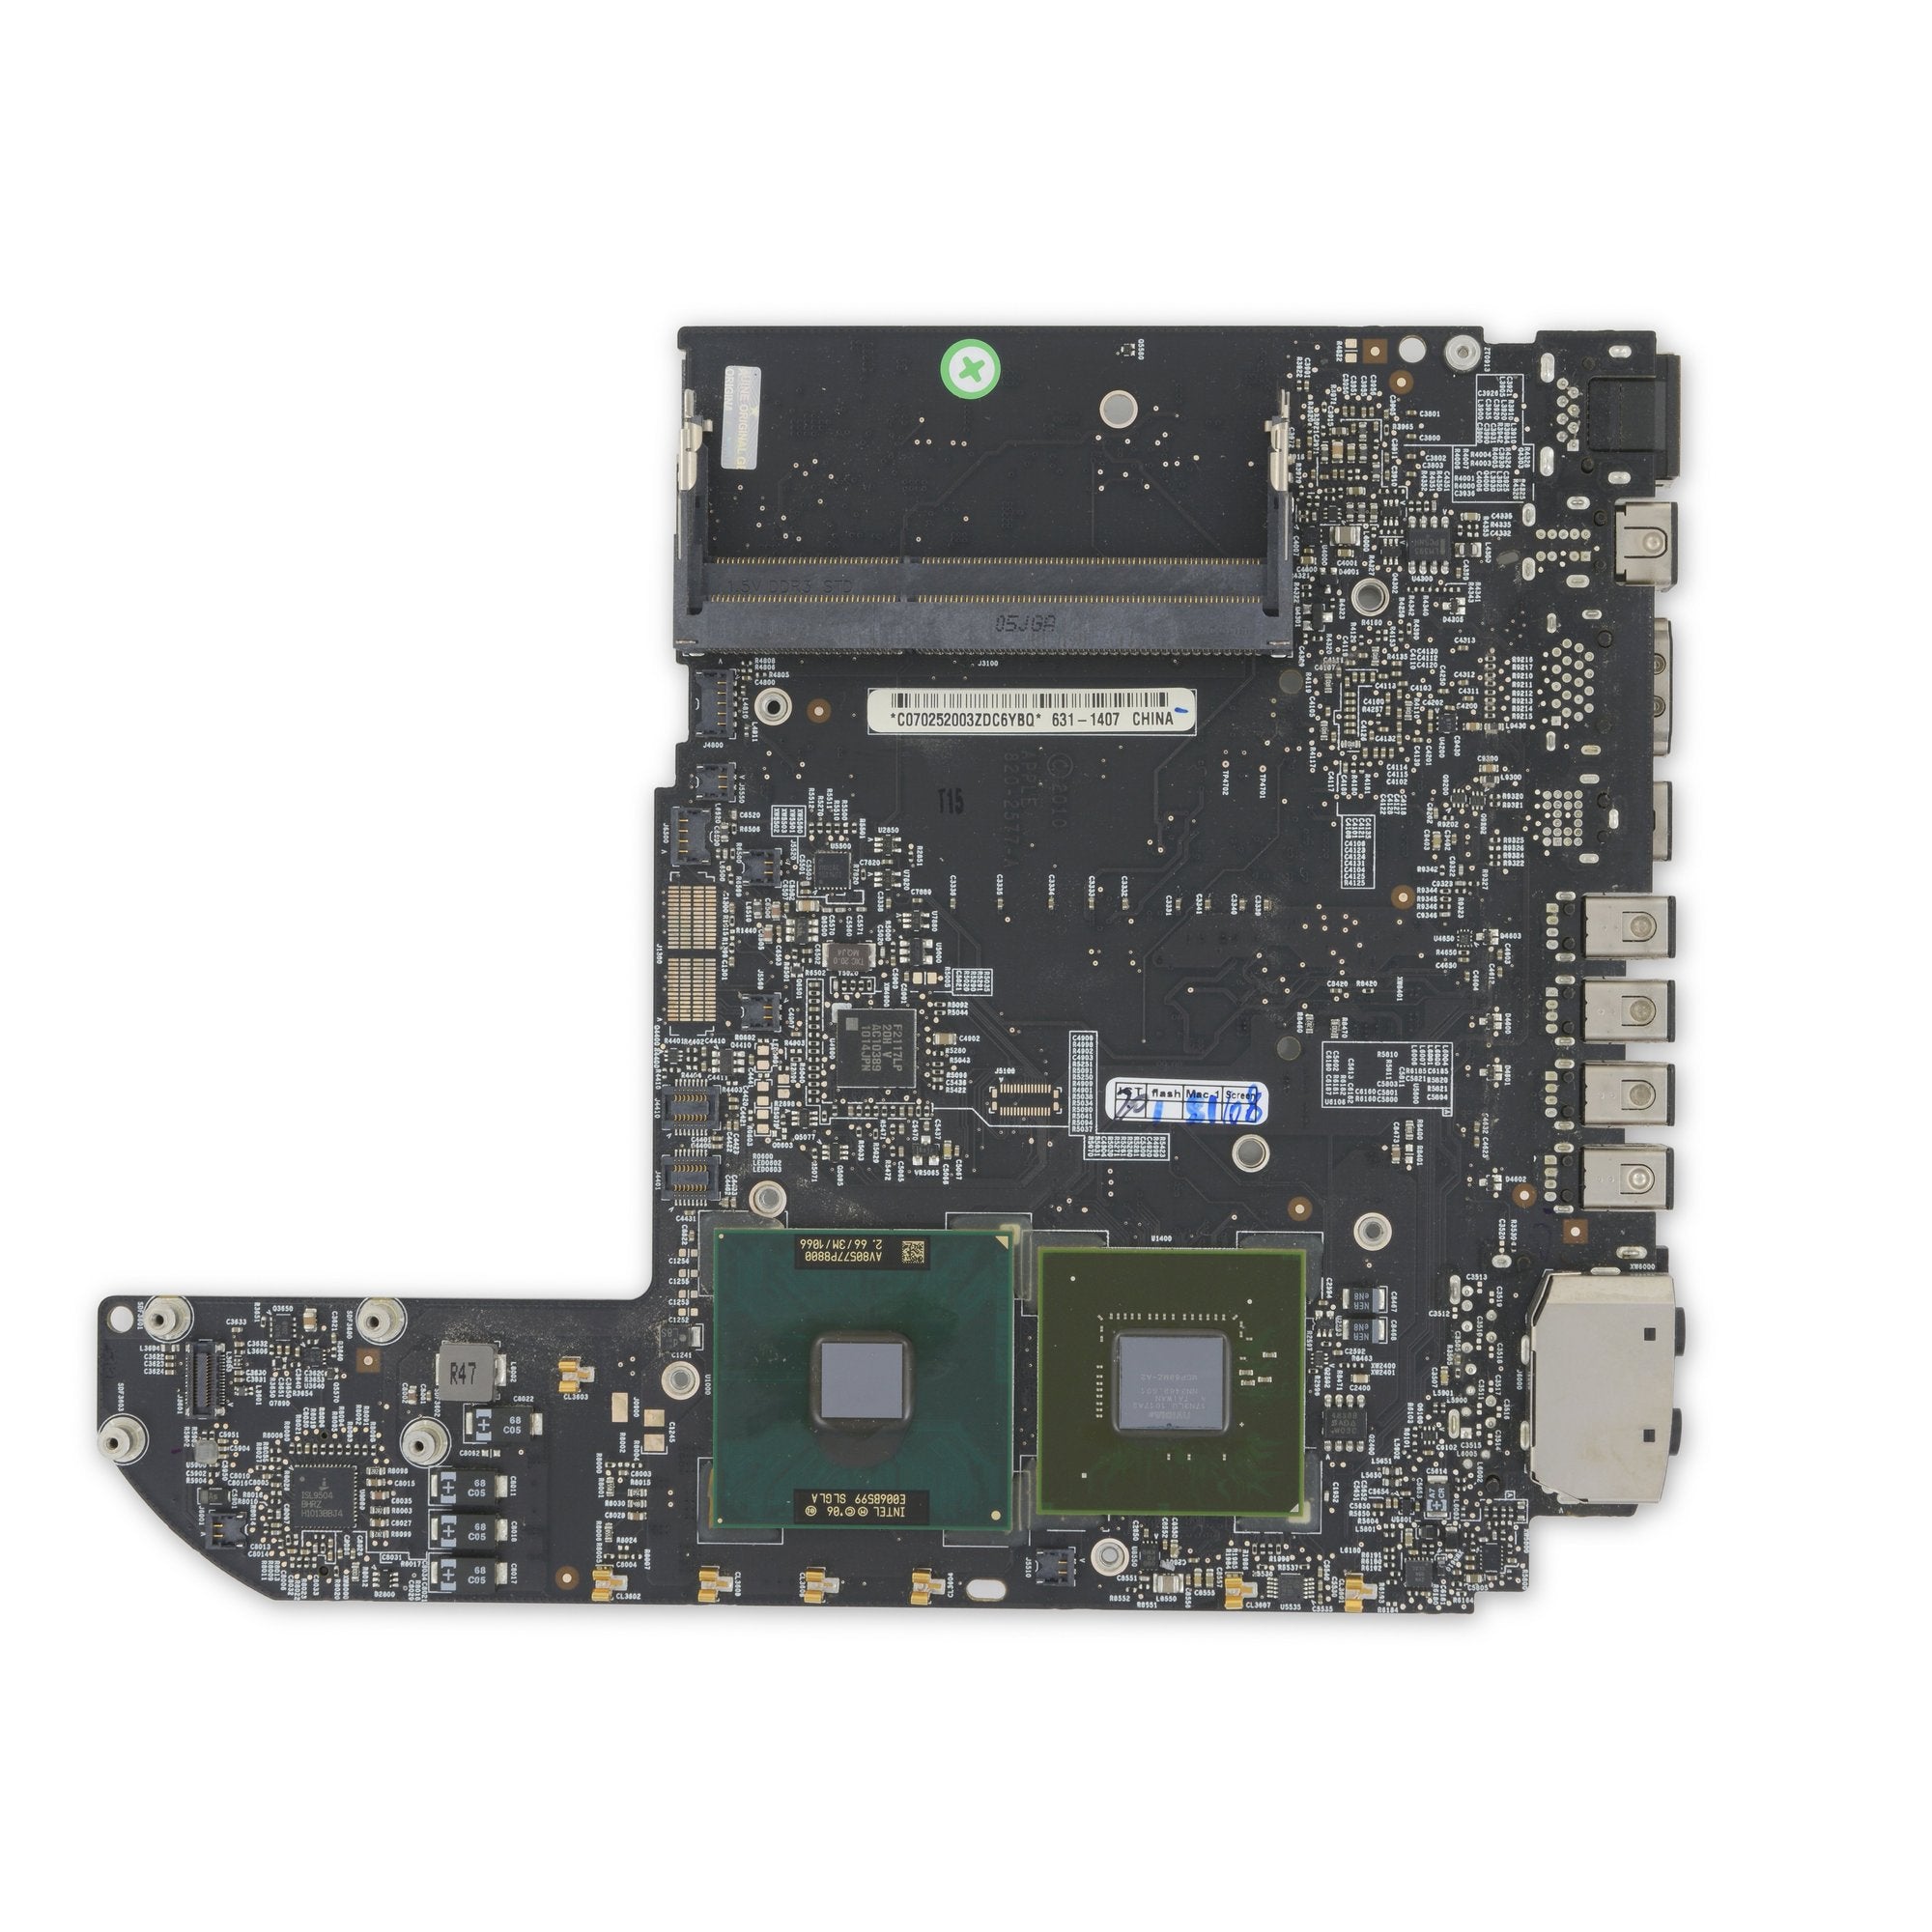 Mac mini A1347 (Mid 2010) 2.66 GHz Logic Board Used